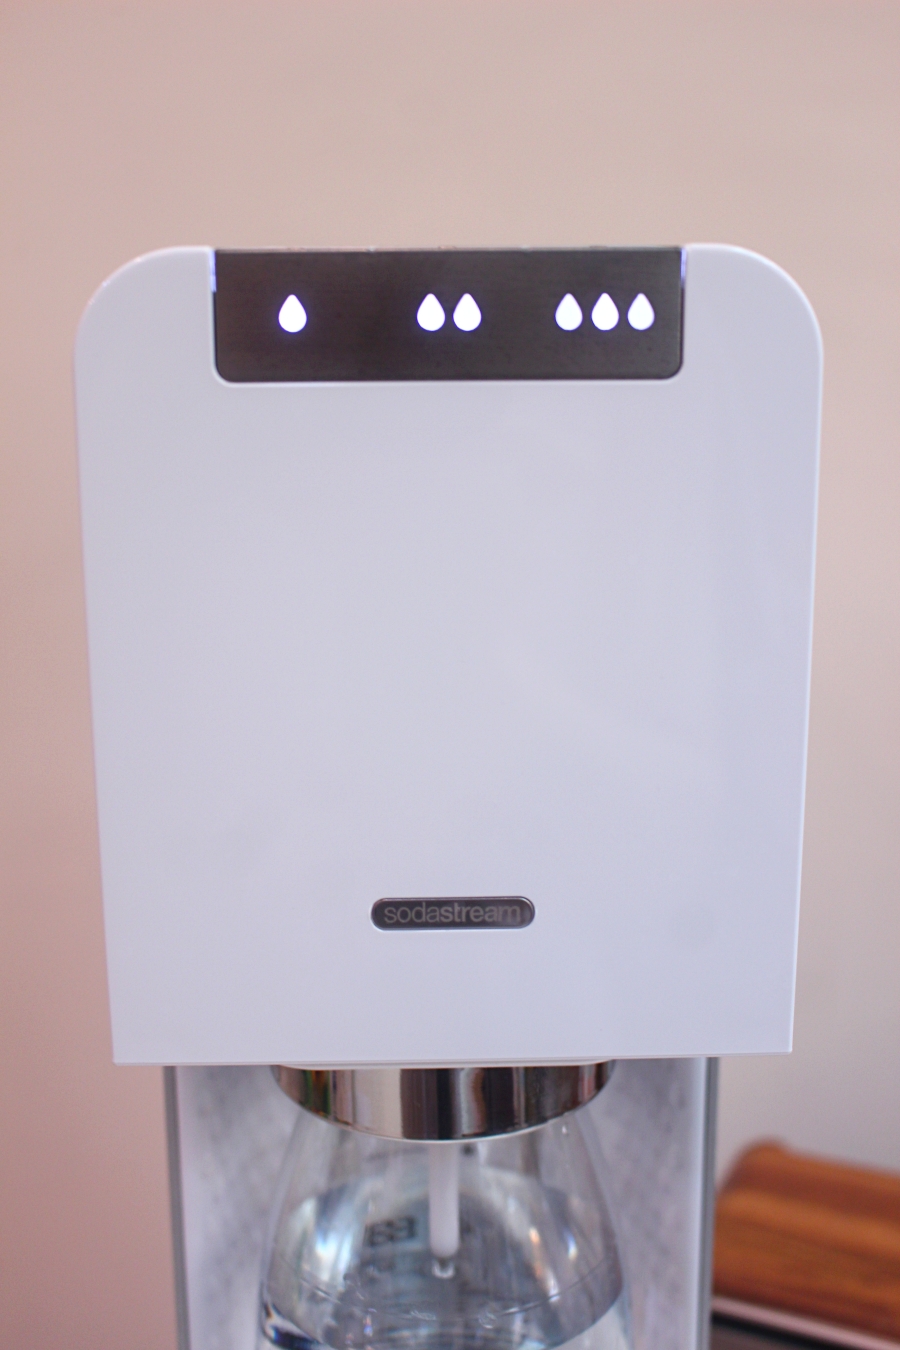 sodastream氣泡水機團購 power source氣泡水機電動款外觀